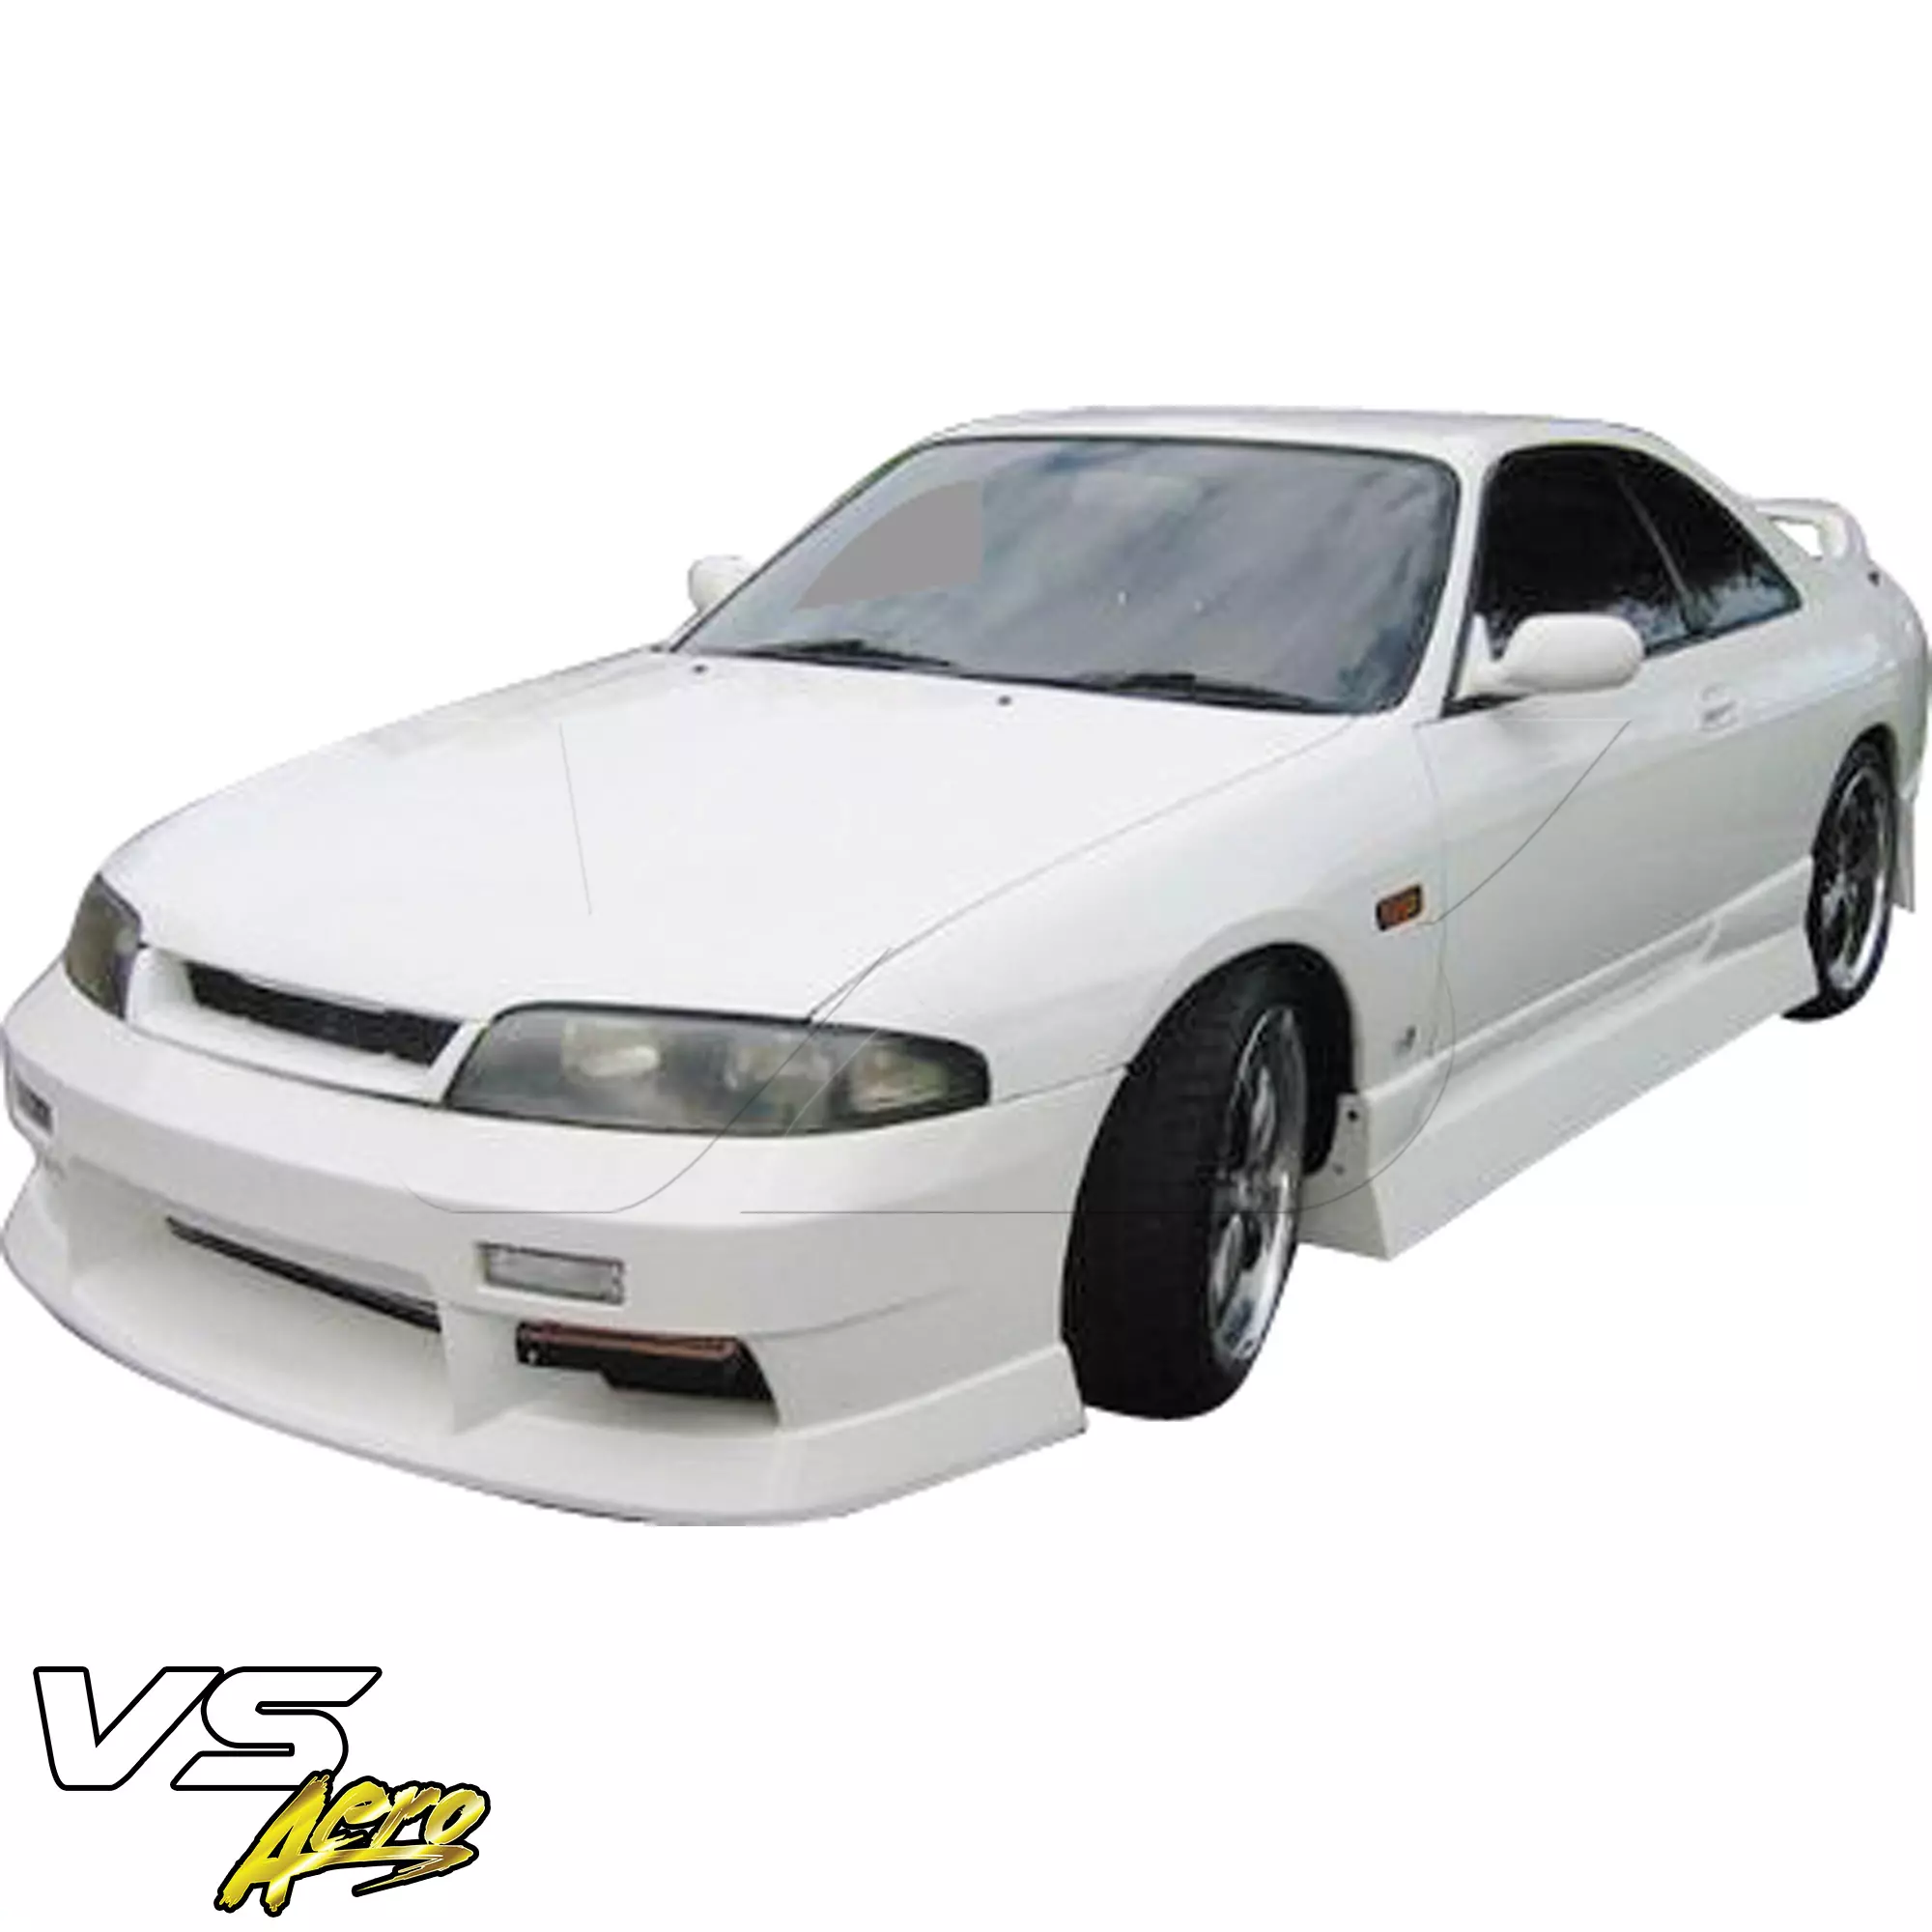 VSaero FRP MSPO Body Kit 4pc > Nissan Skyline R33 GTS 1995-1998 > 2dr Coupe - Image 2